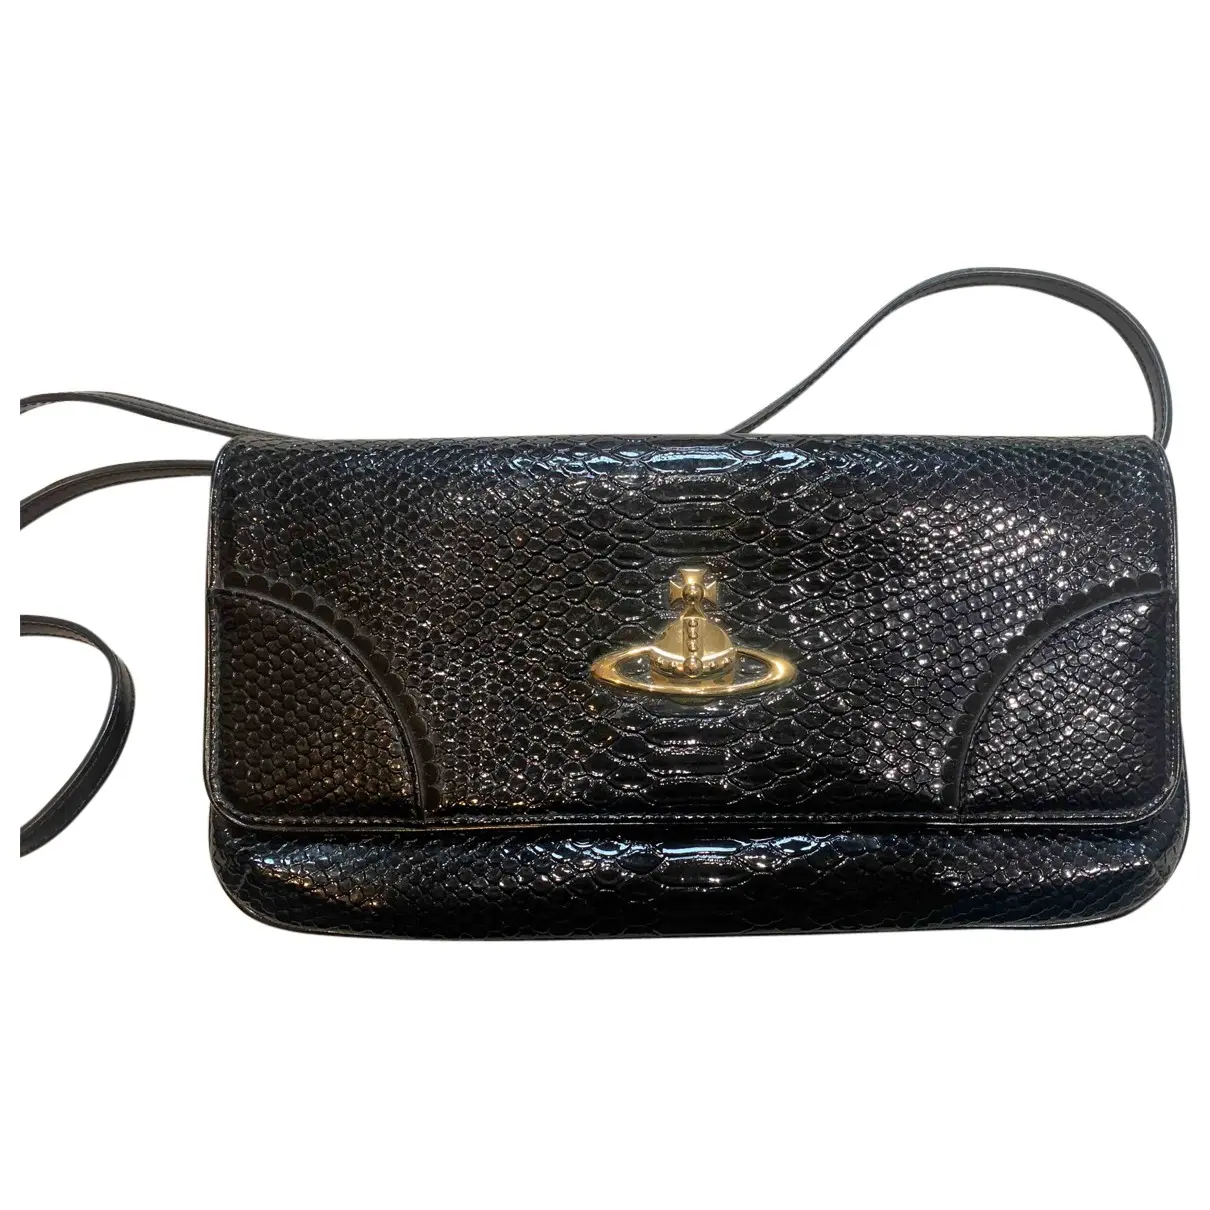 Leather clutch bag Vivienne Westwood